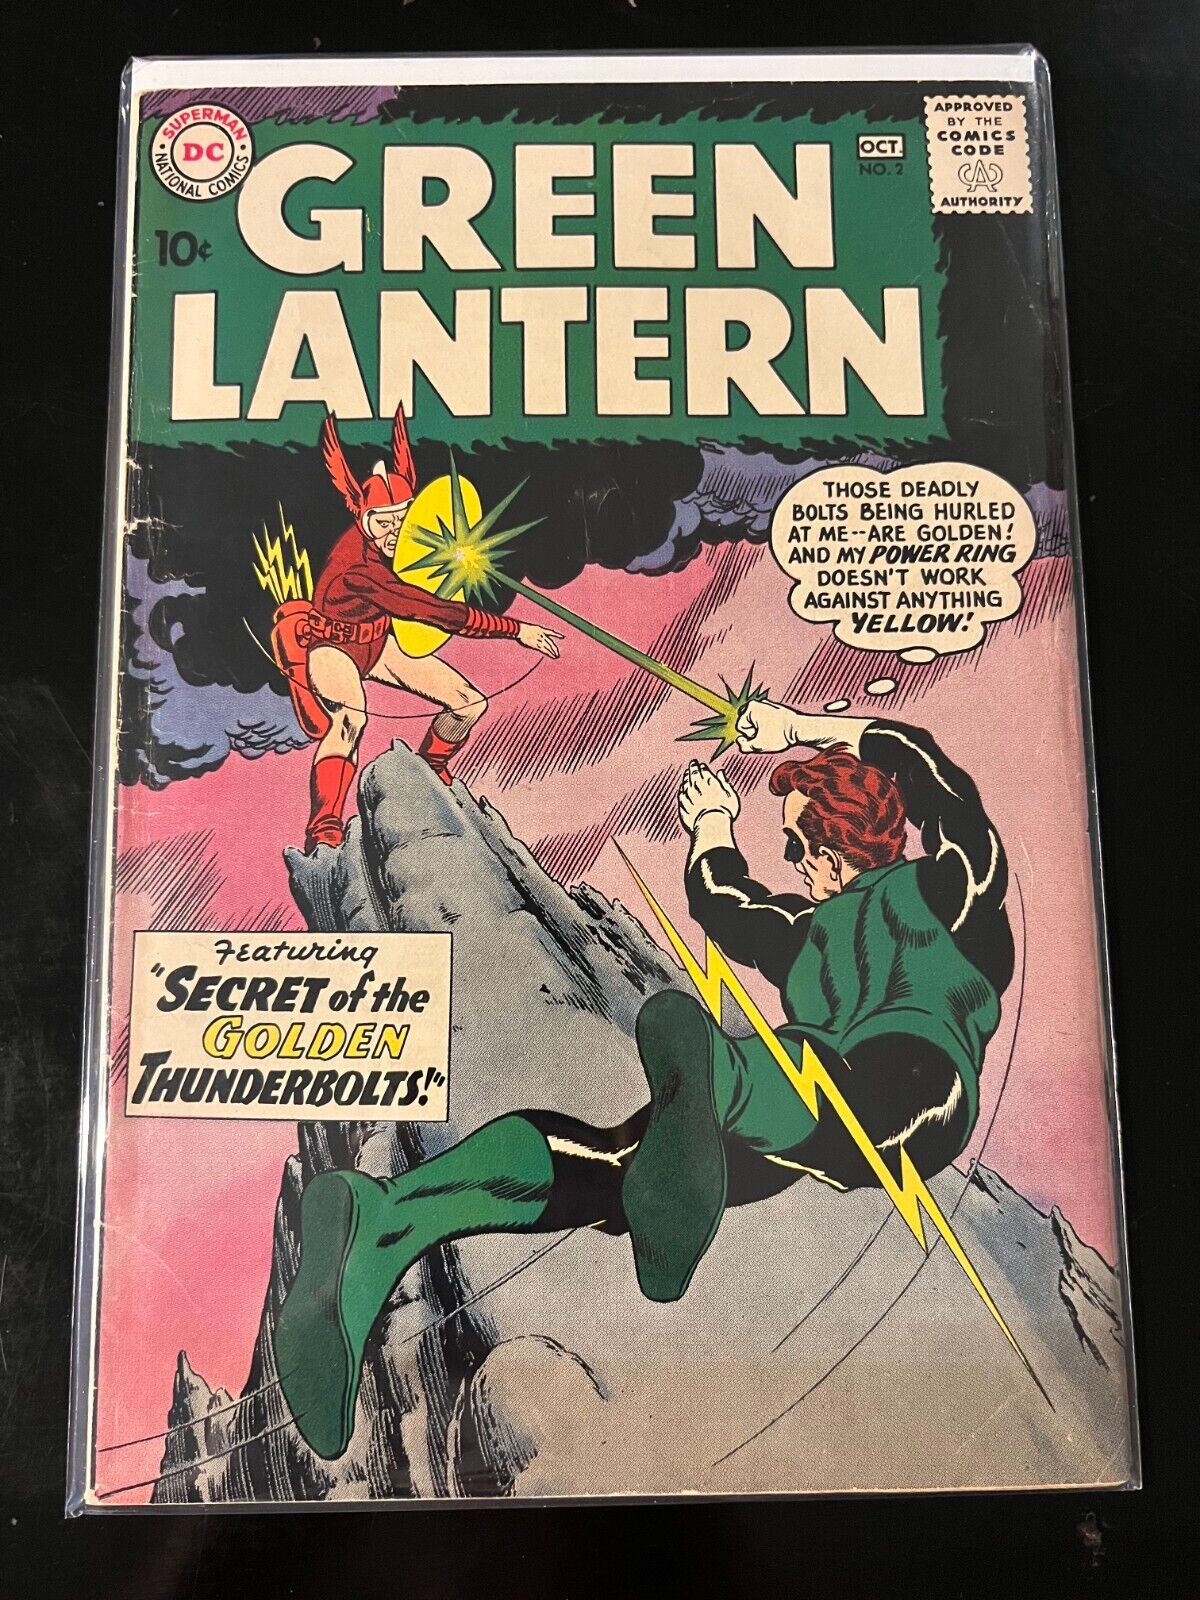 GREEN LANTERN #2 - (DC, 1960) - 1ST APPEARANCE OF ANTIMATTER UNIVERSE/QWARDIANS